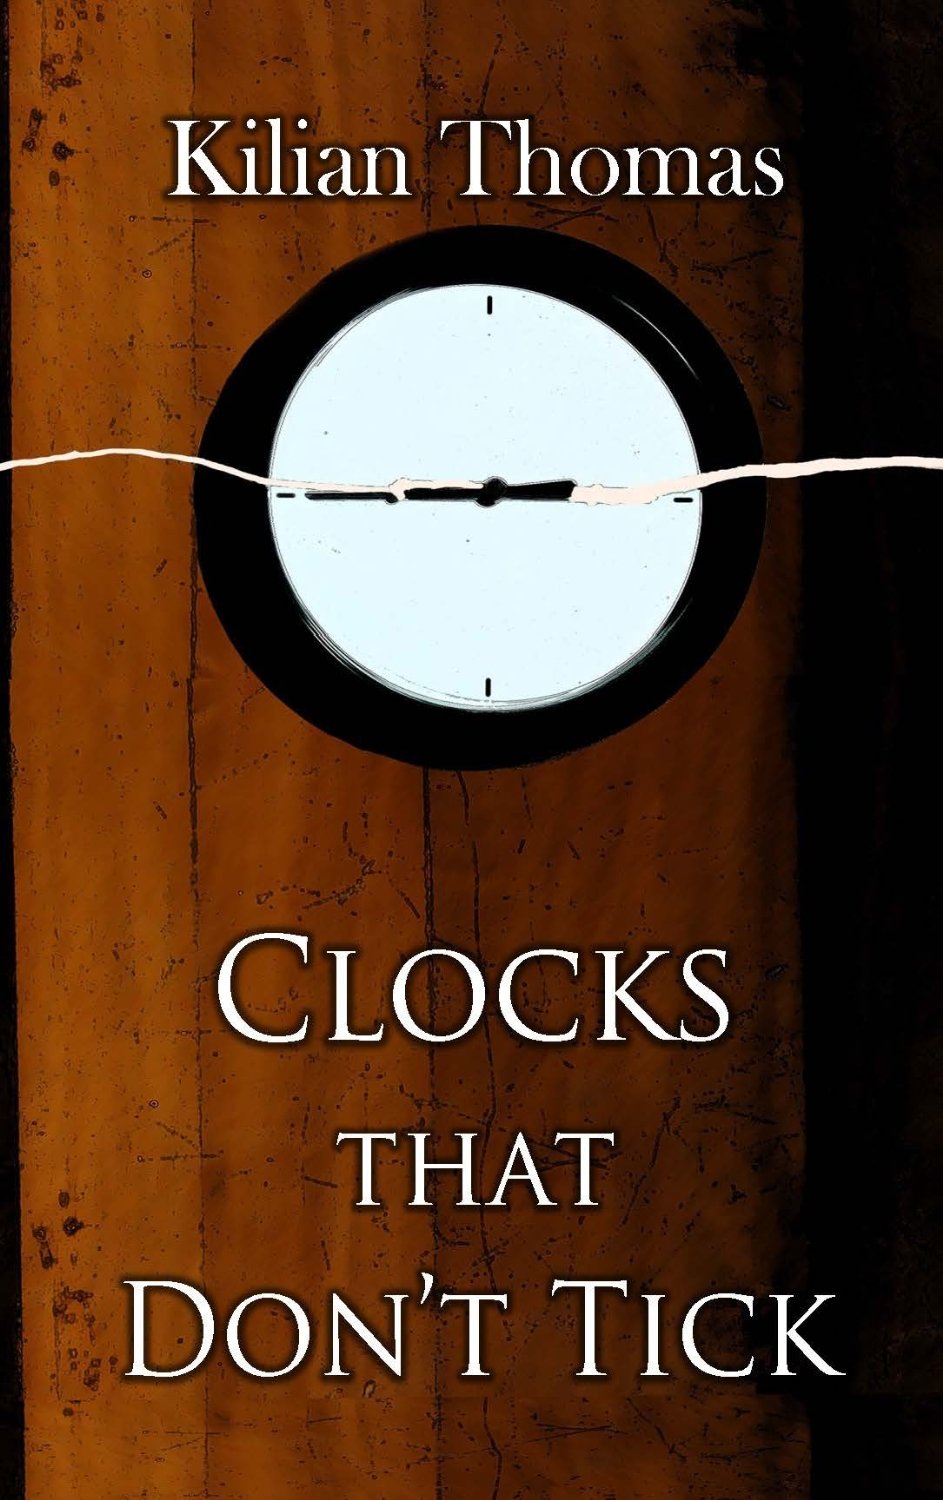 Clocks that Don’t Tick by Kilian Thomas